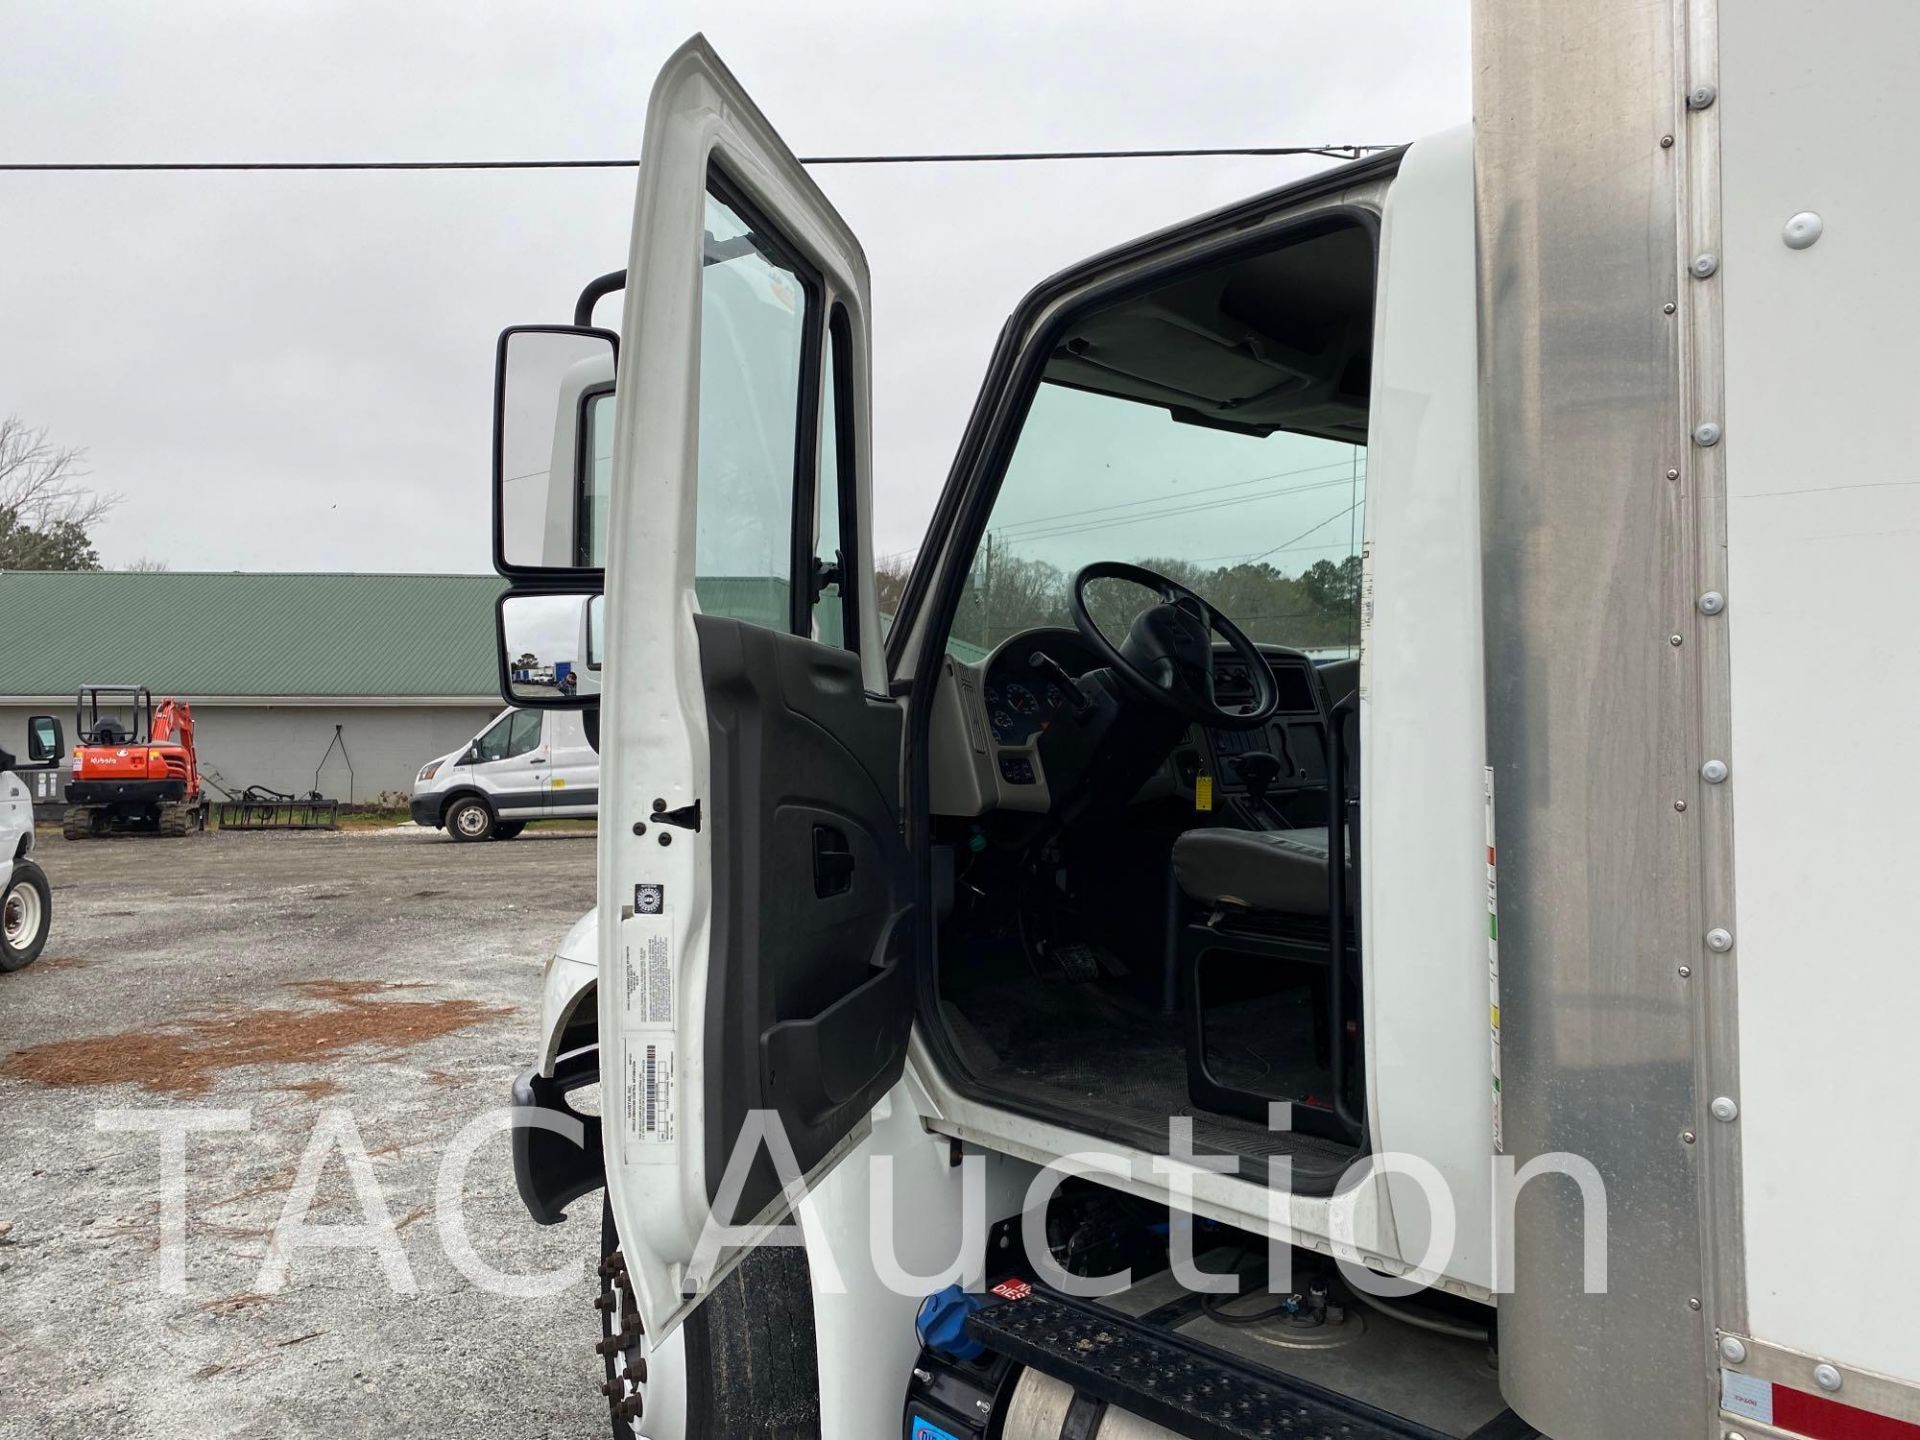 2019 International Durastar 4300 26ft Box Truck - Image 19 of 85